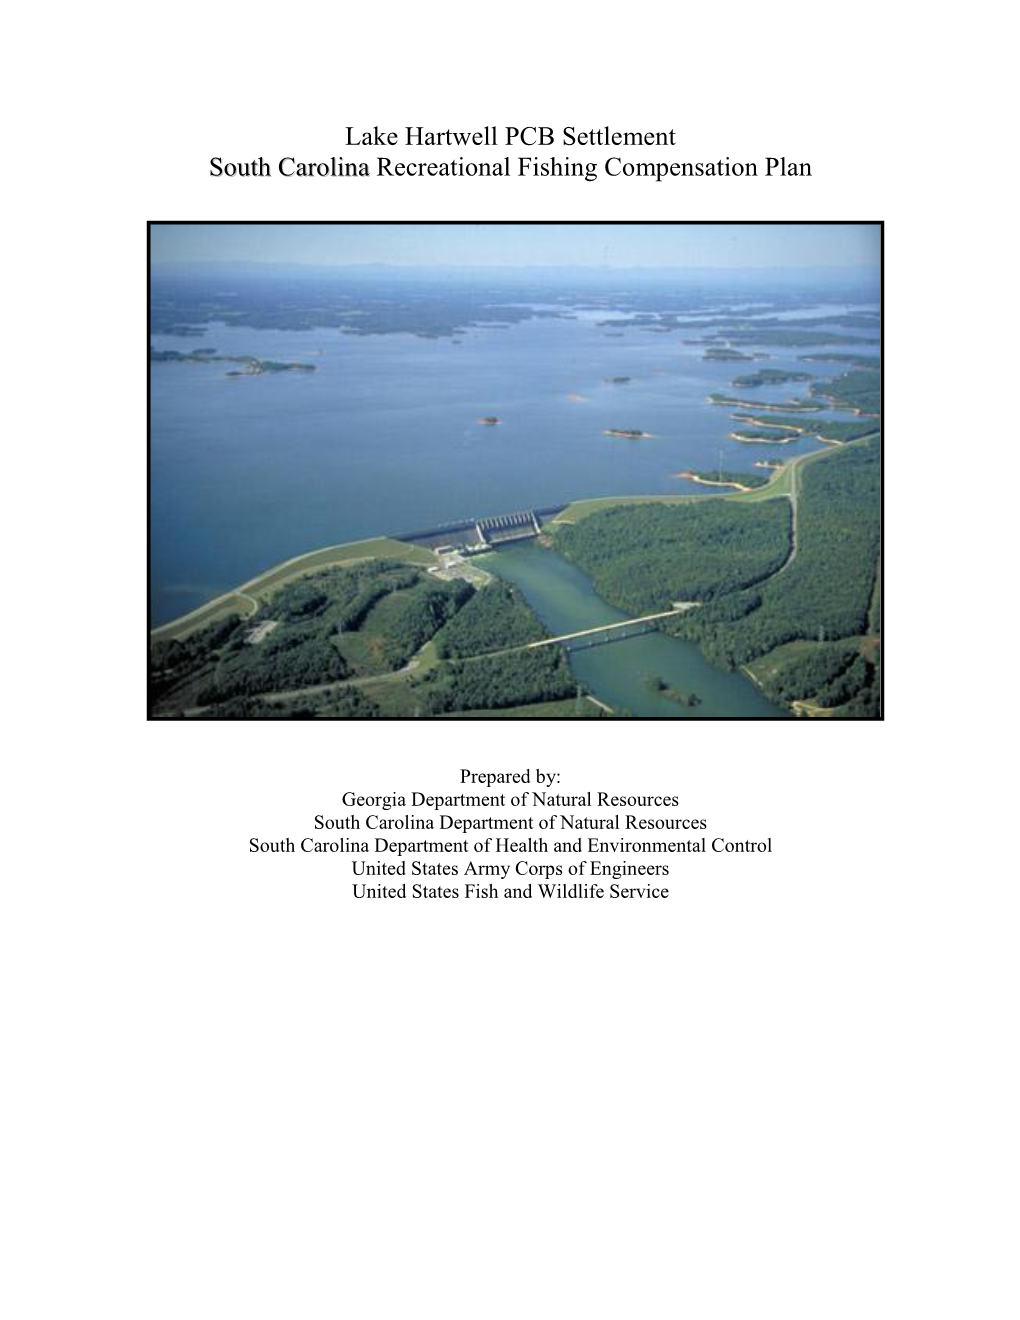 Lake Hartwell PCB Compensation Plan